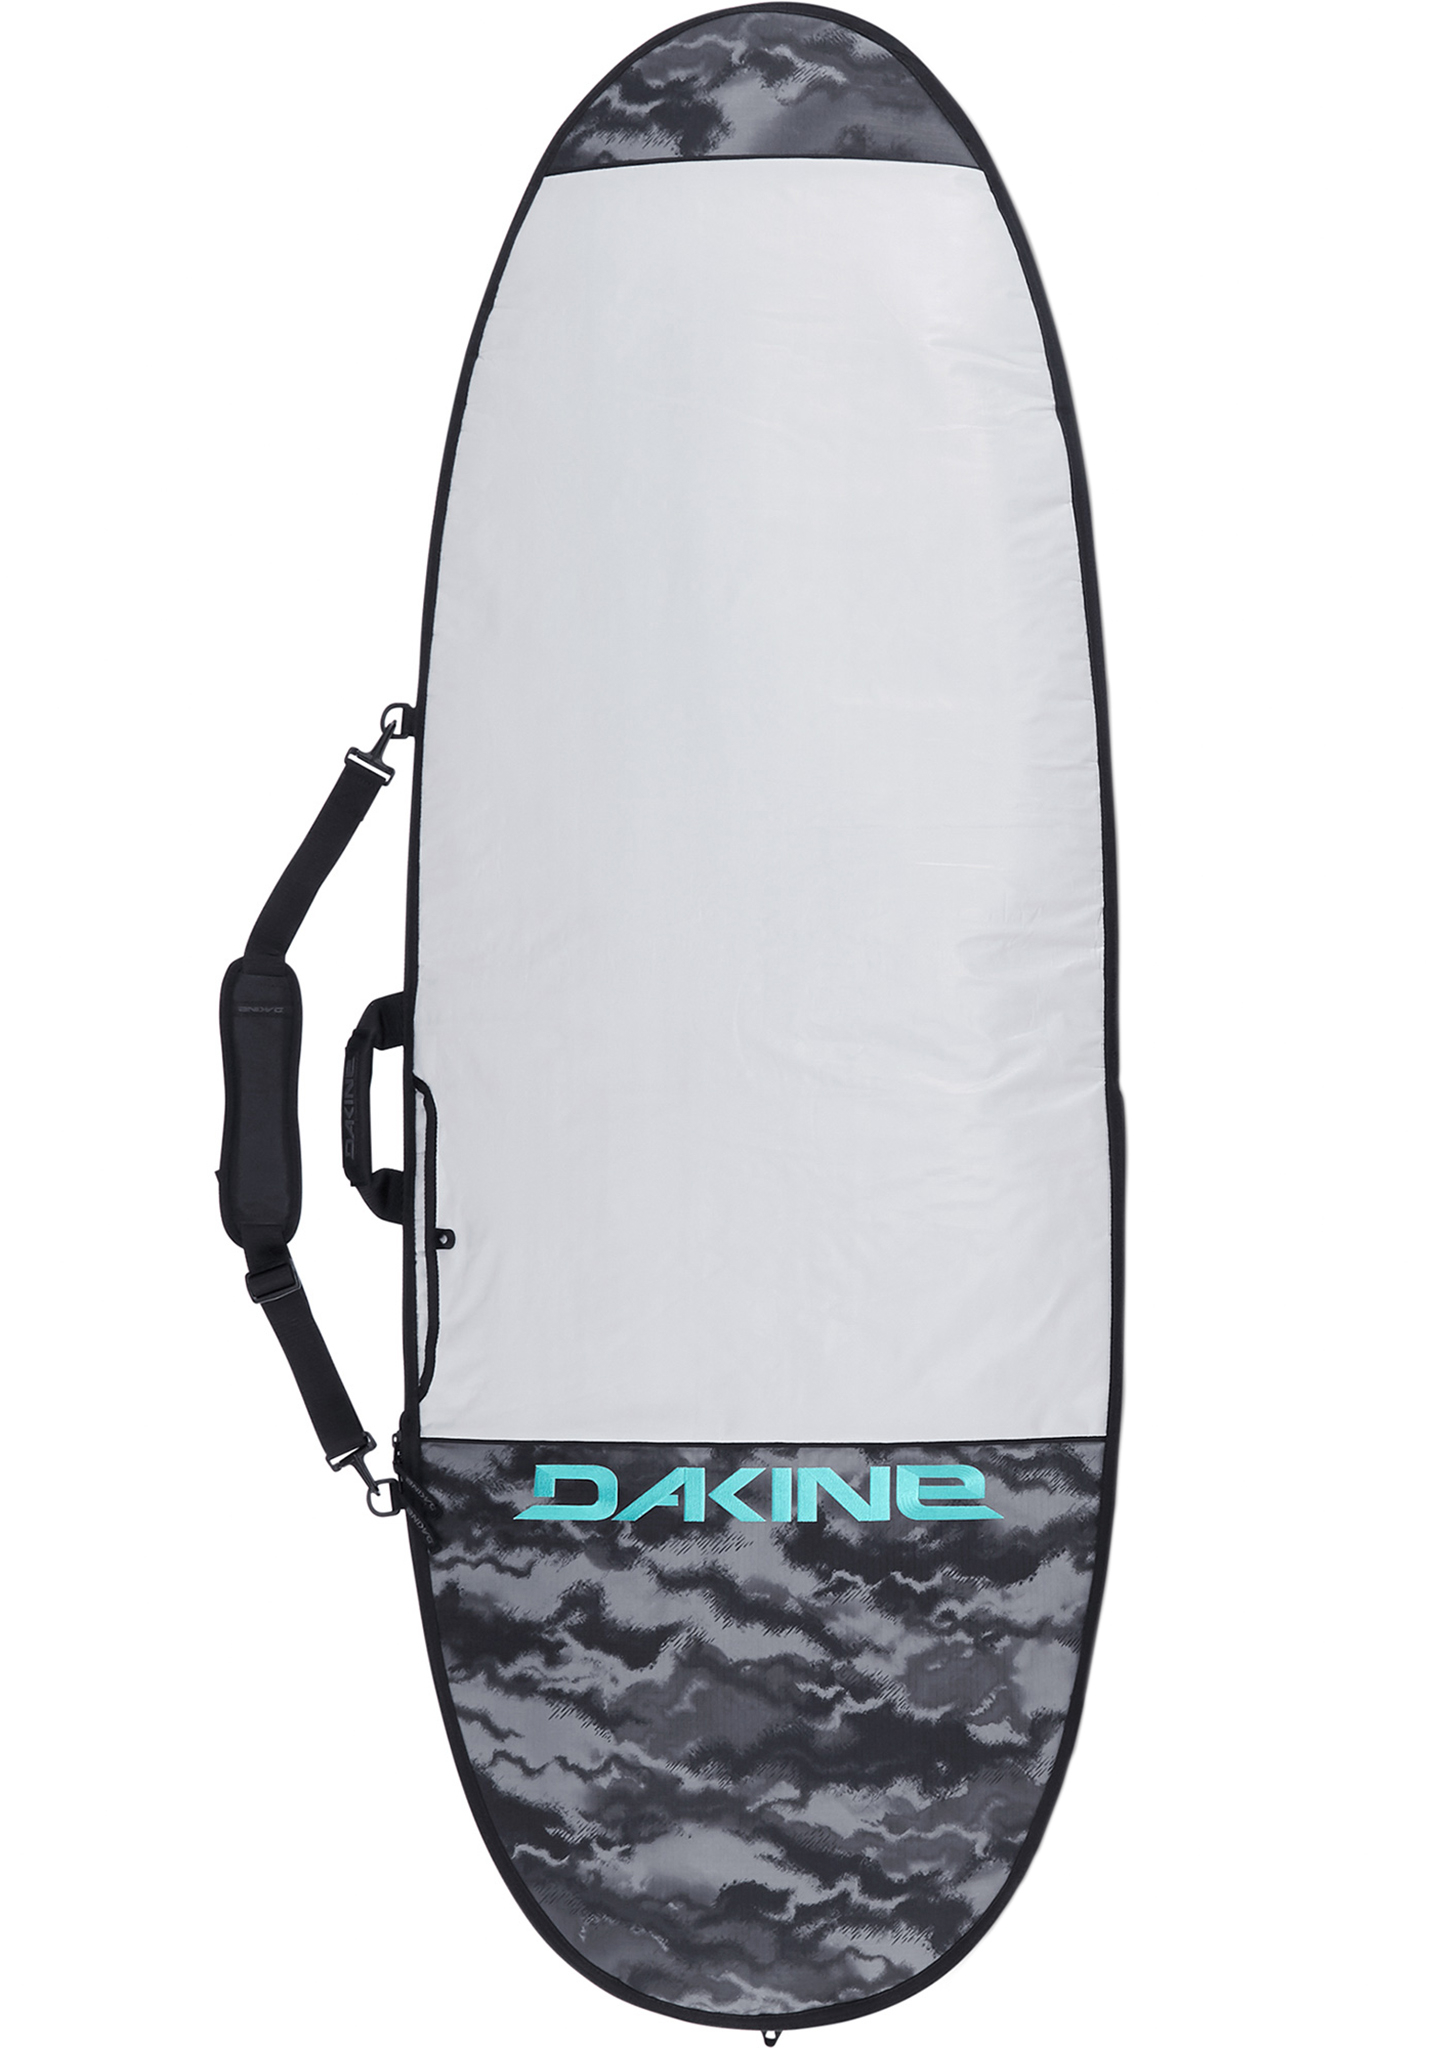 Dakine Daylight Hybrid 6'6" Surf Boardbags dark ashcroft camo One Size